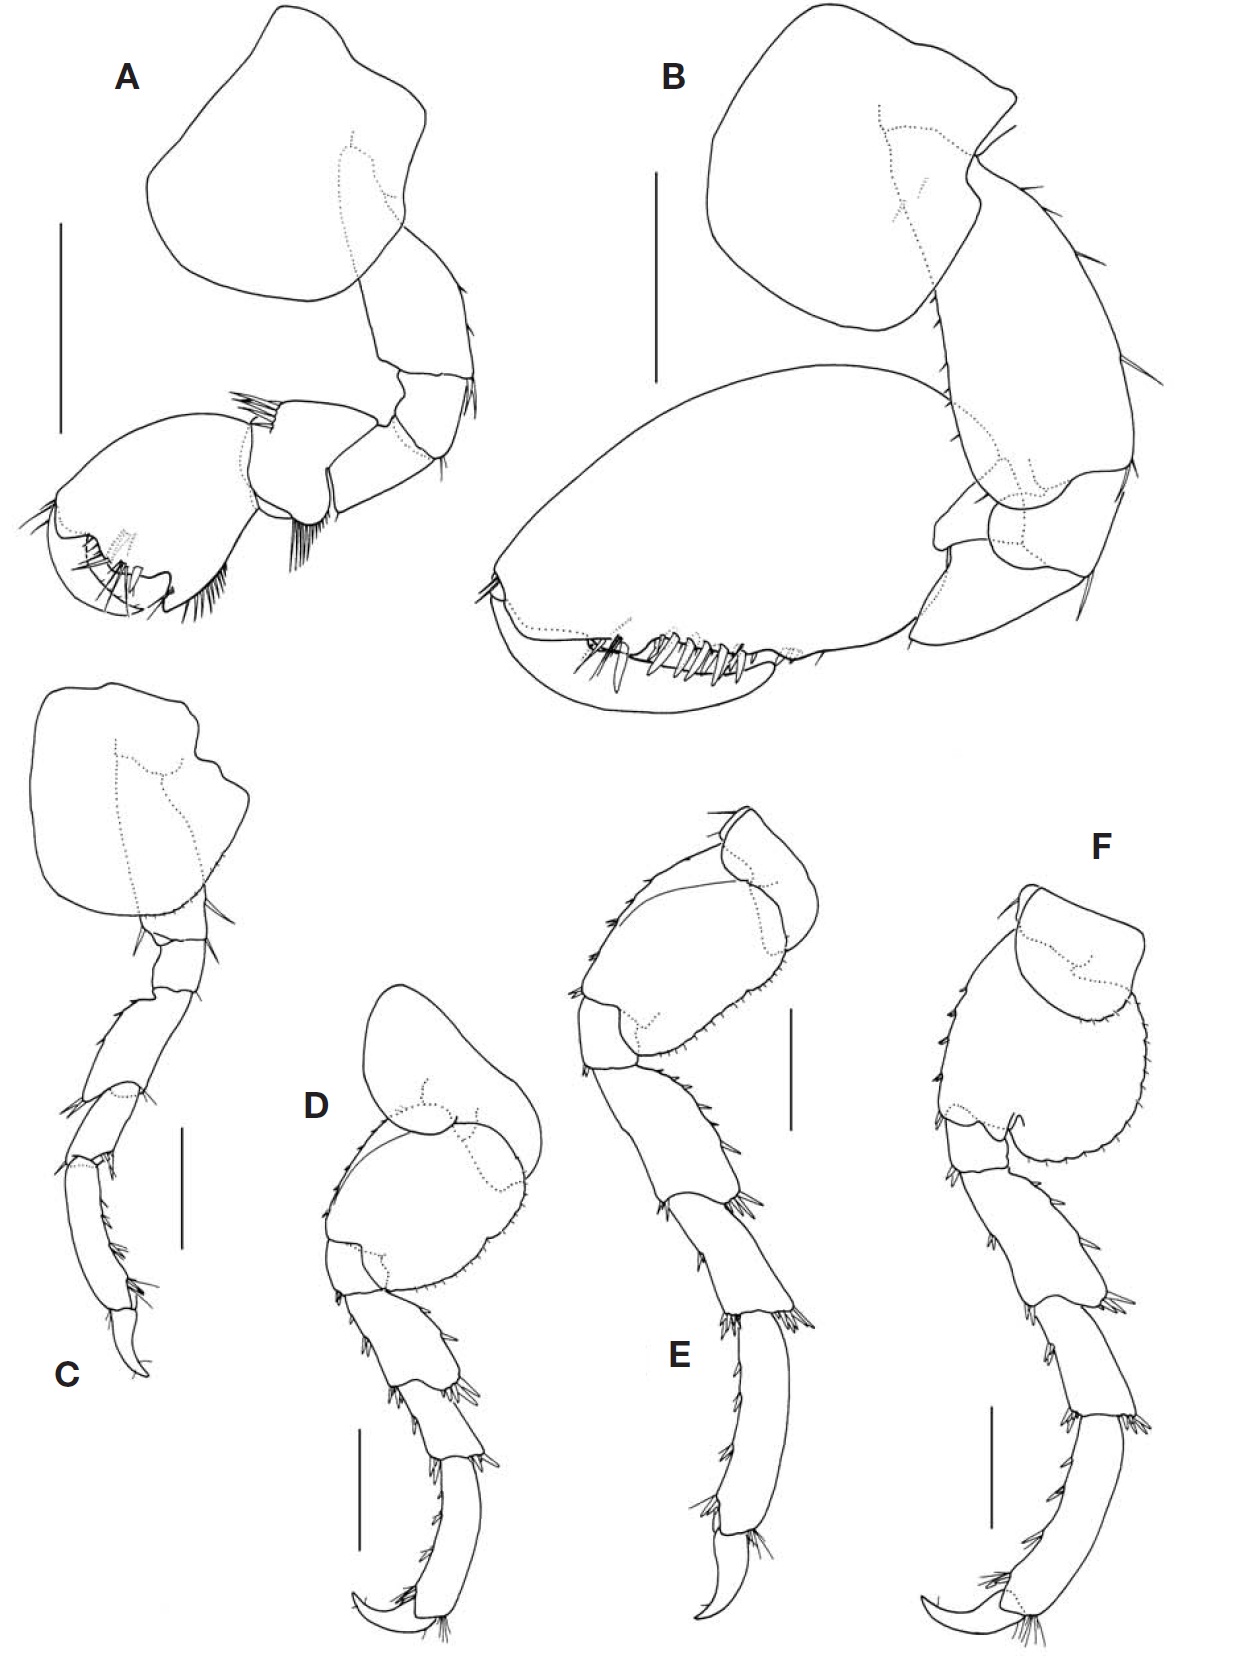 Protohyale pumila (Hiwatari and Kajihara), male. A, Gnathopod 1; B, Gnathopod 2; C, Pereopod 2; D, Pereopod 3; E, Pereopod 4; F, Pereopod 5. Scale bars: A-F=0.5 mm.